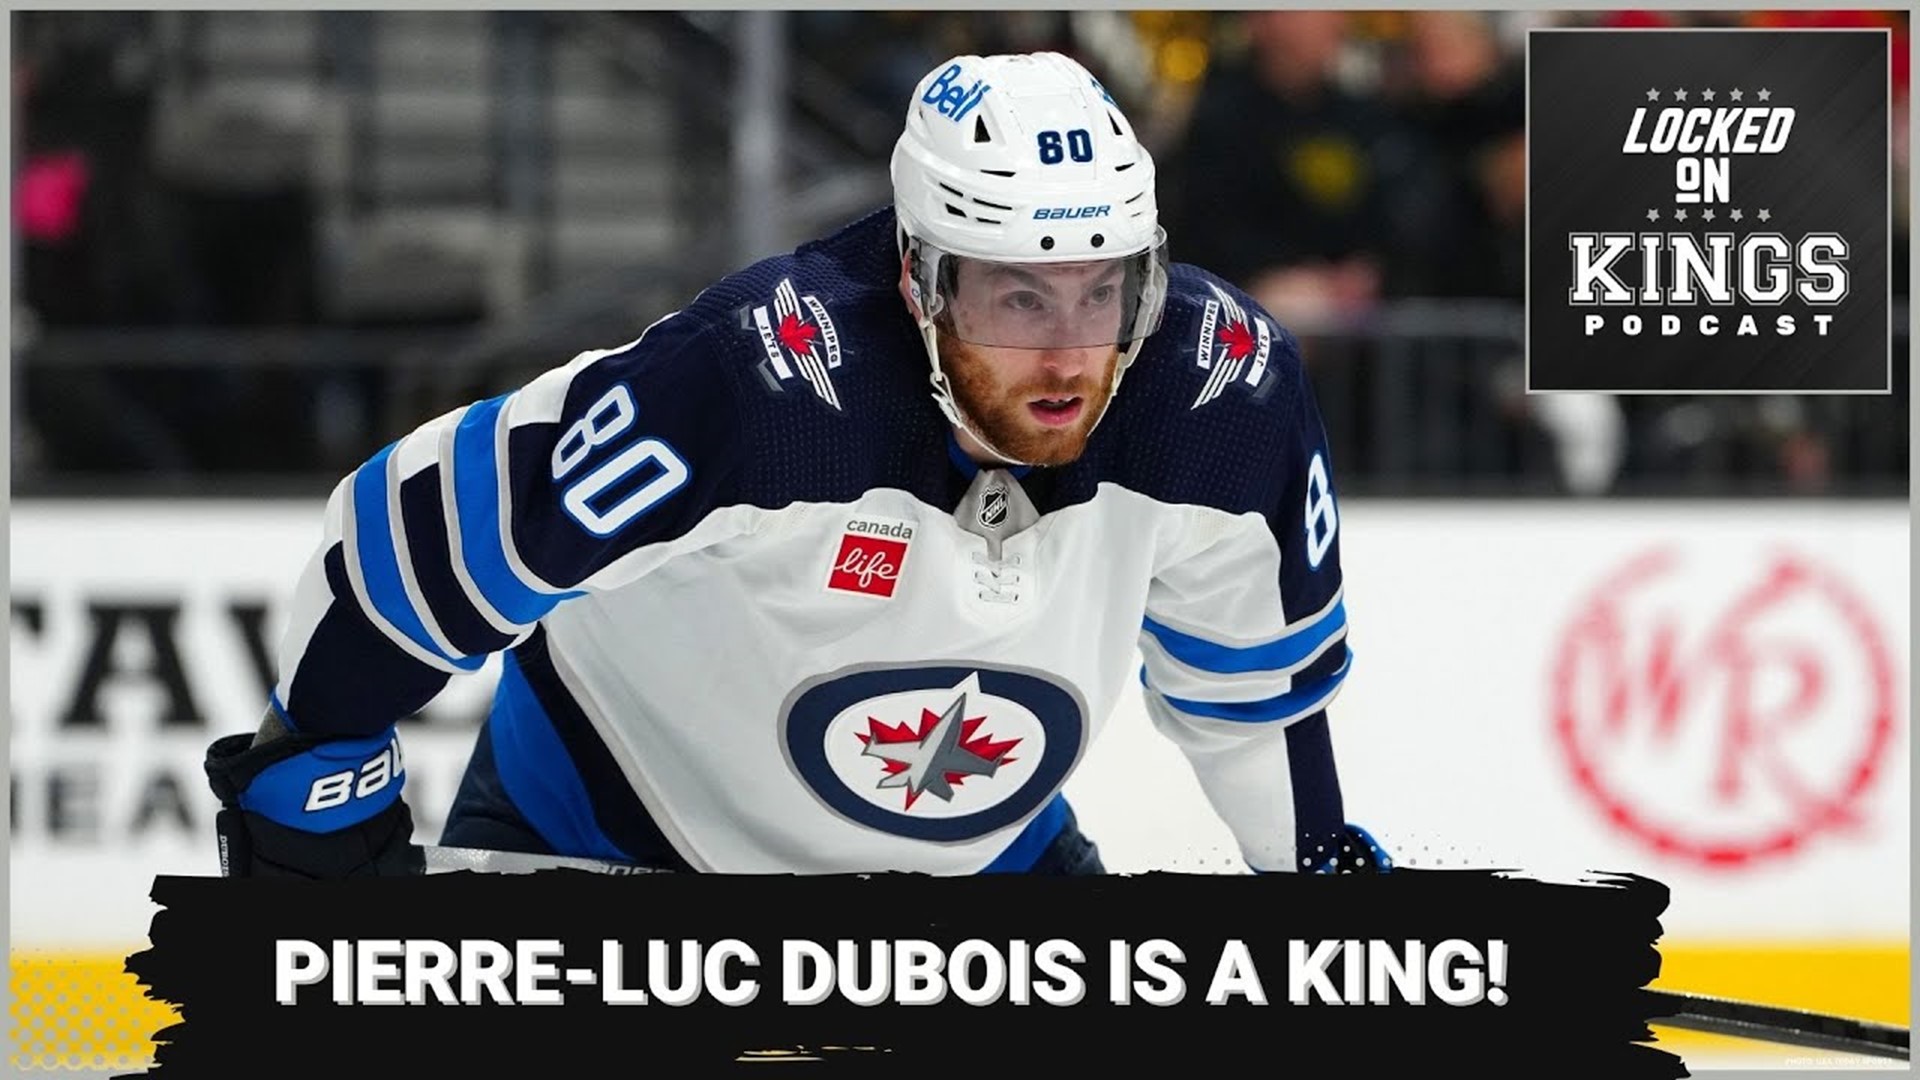 Pierre-Luc Dubois is a King! kcentv